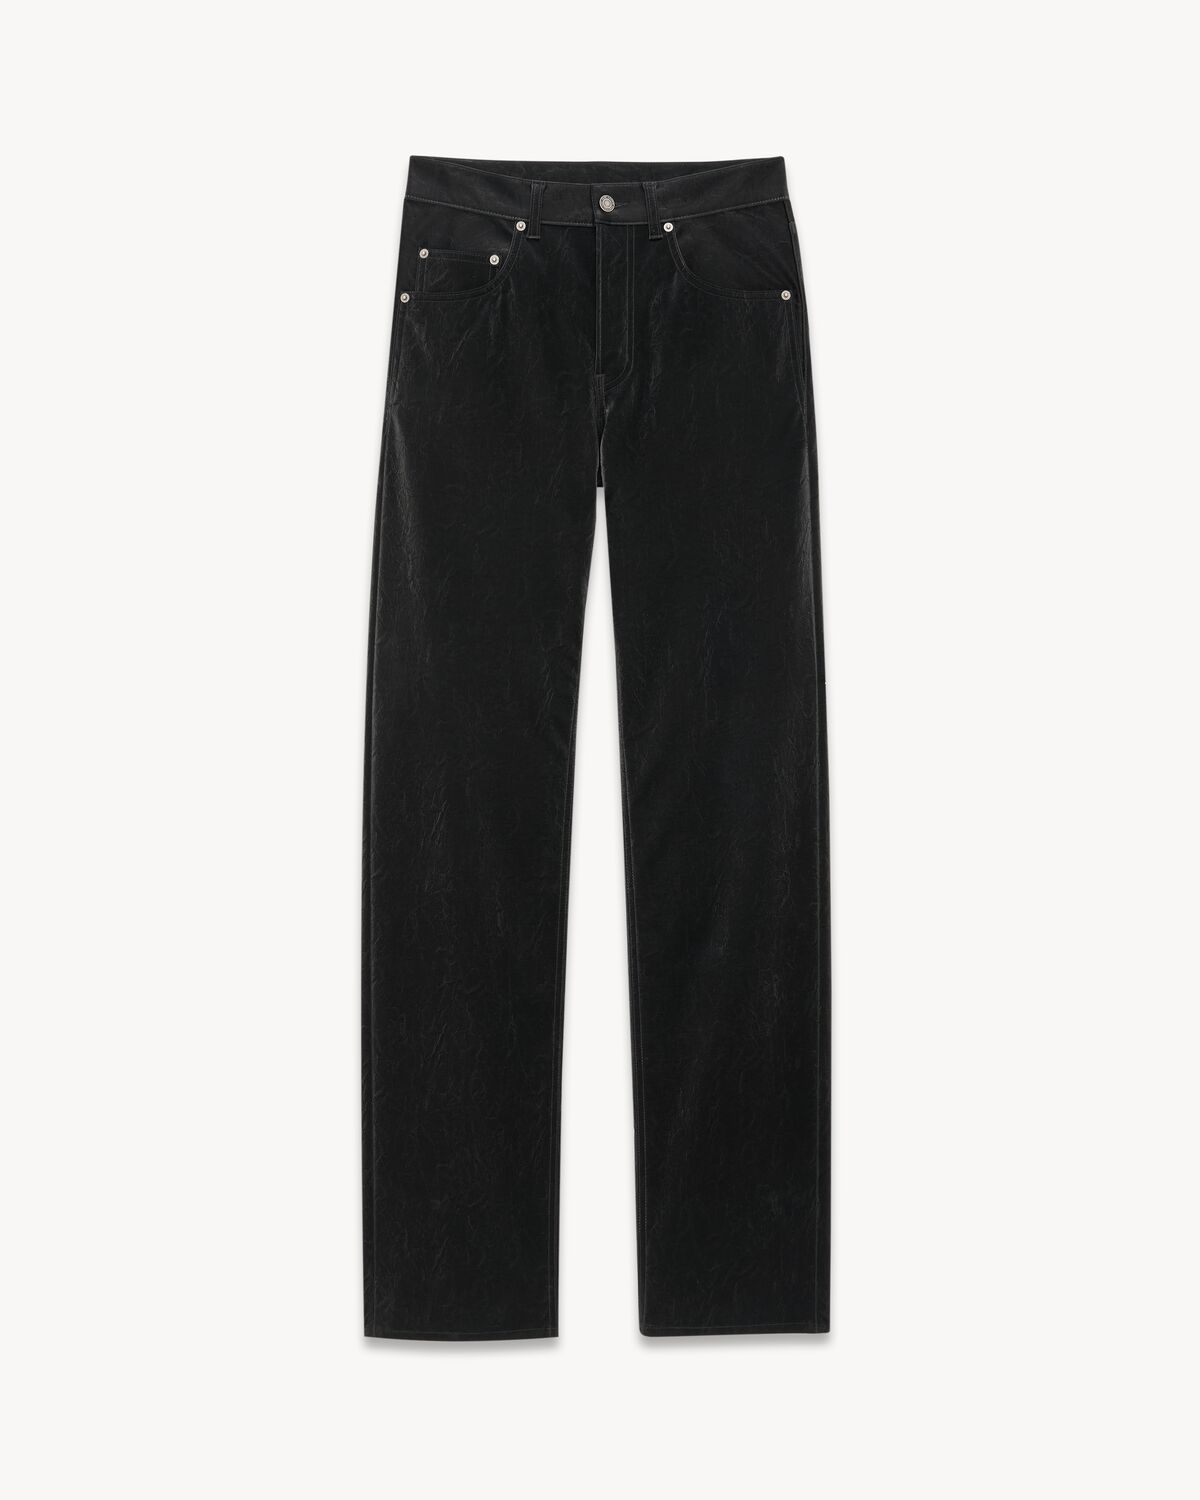 long extreme baggy jeans in crinkle black denim